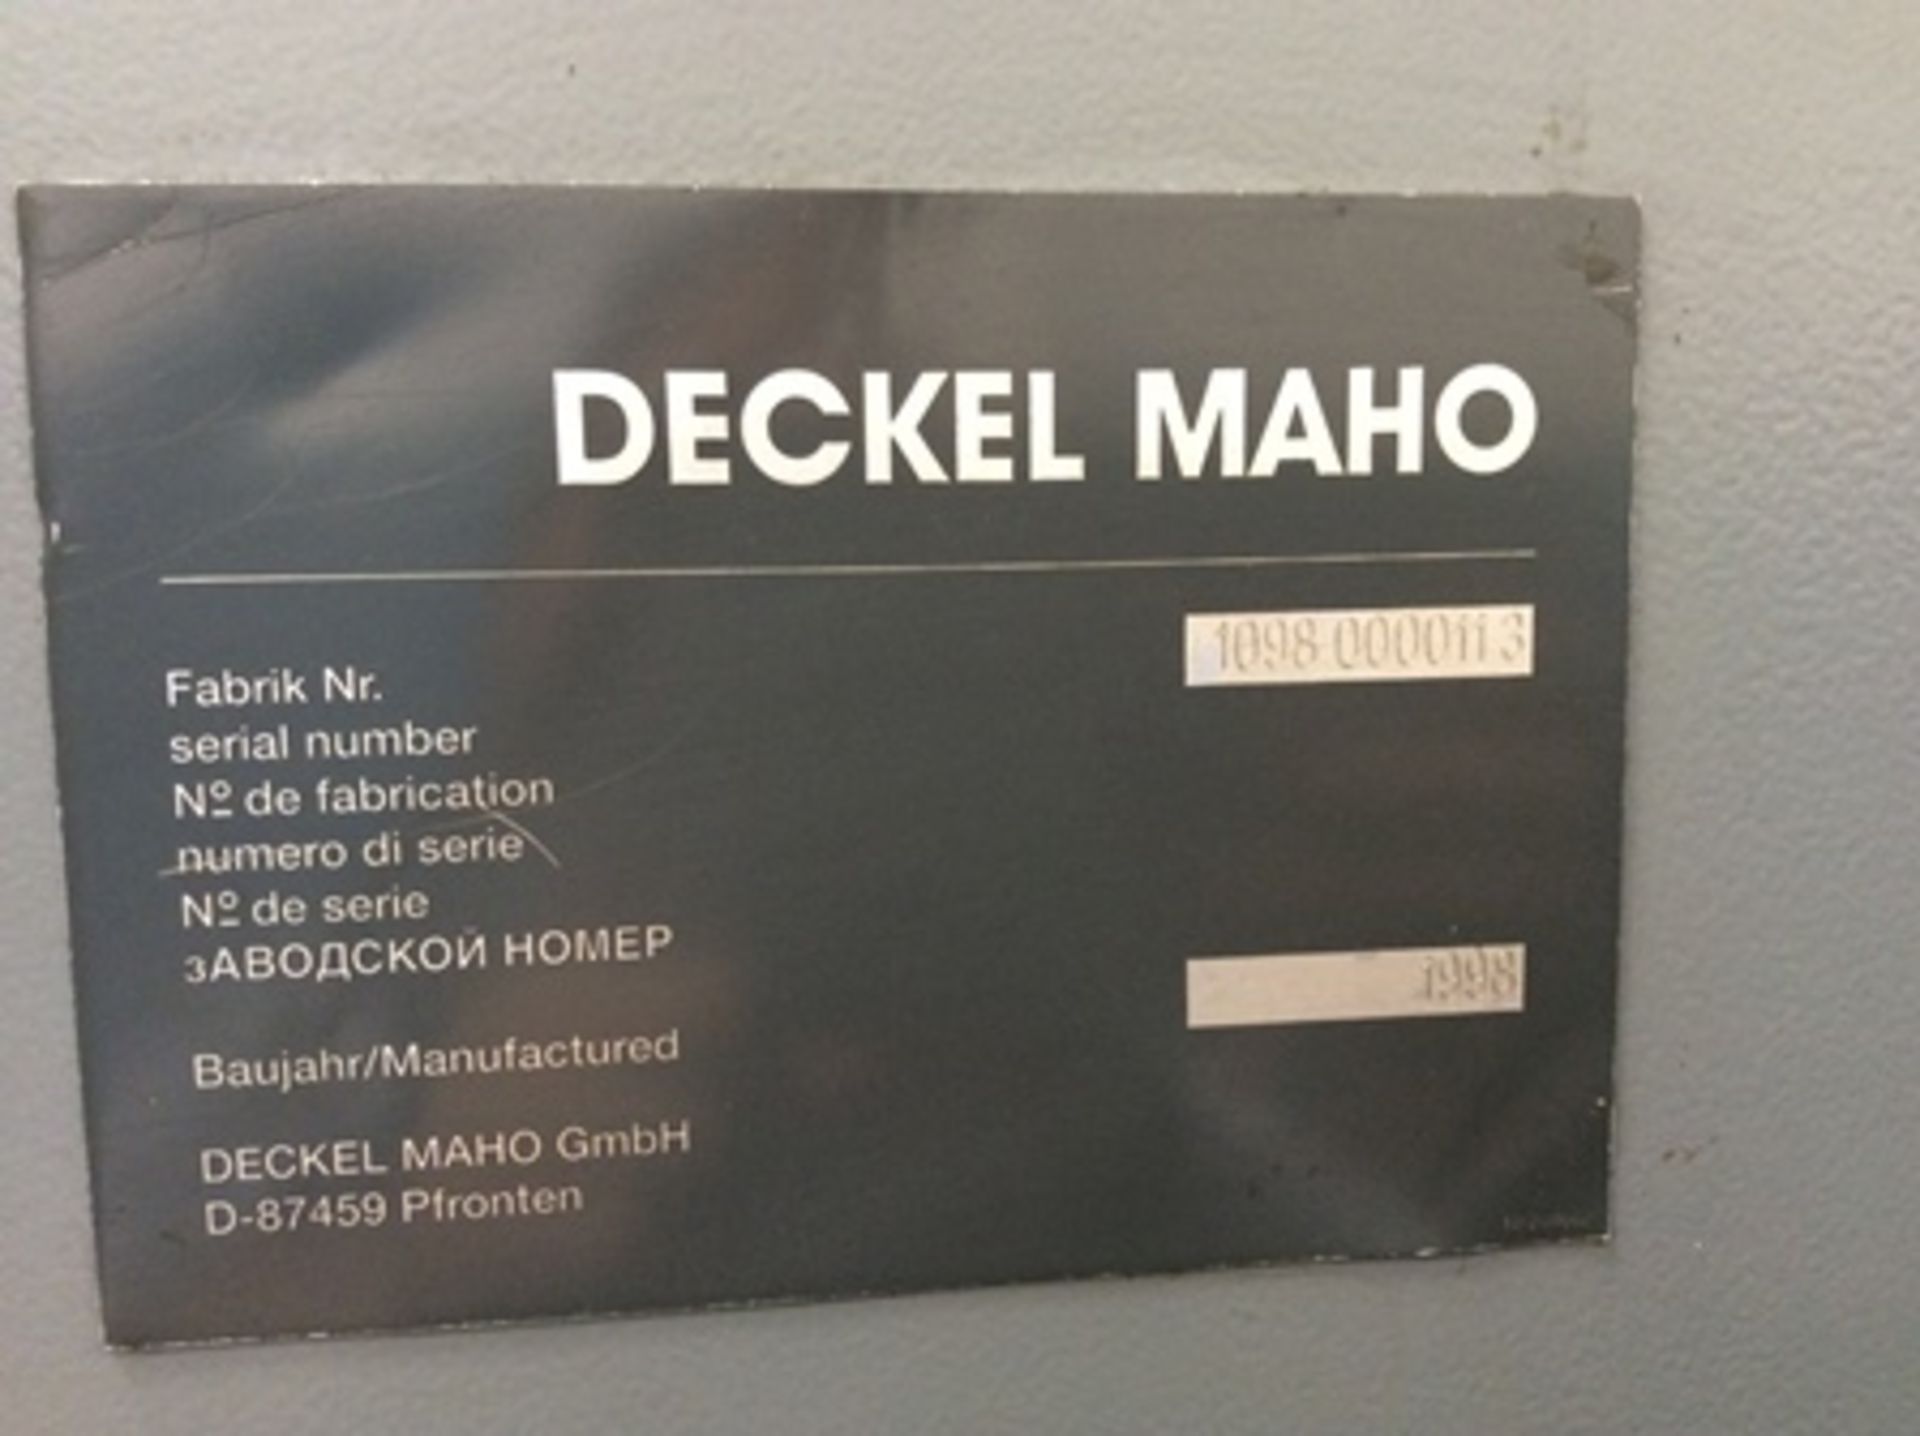 CNC marca Deckel Maho mod. Mill-Plus serie 10980000113 año 1998, husillo horizontal/vertical, carru - Image 11 of 25